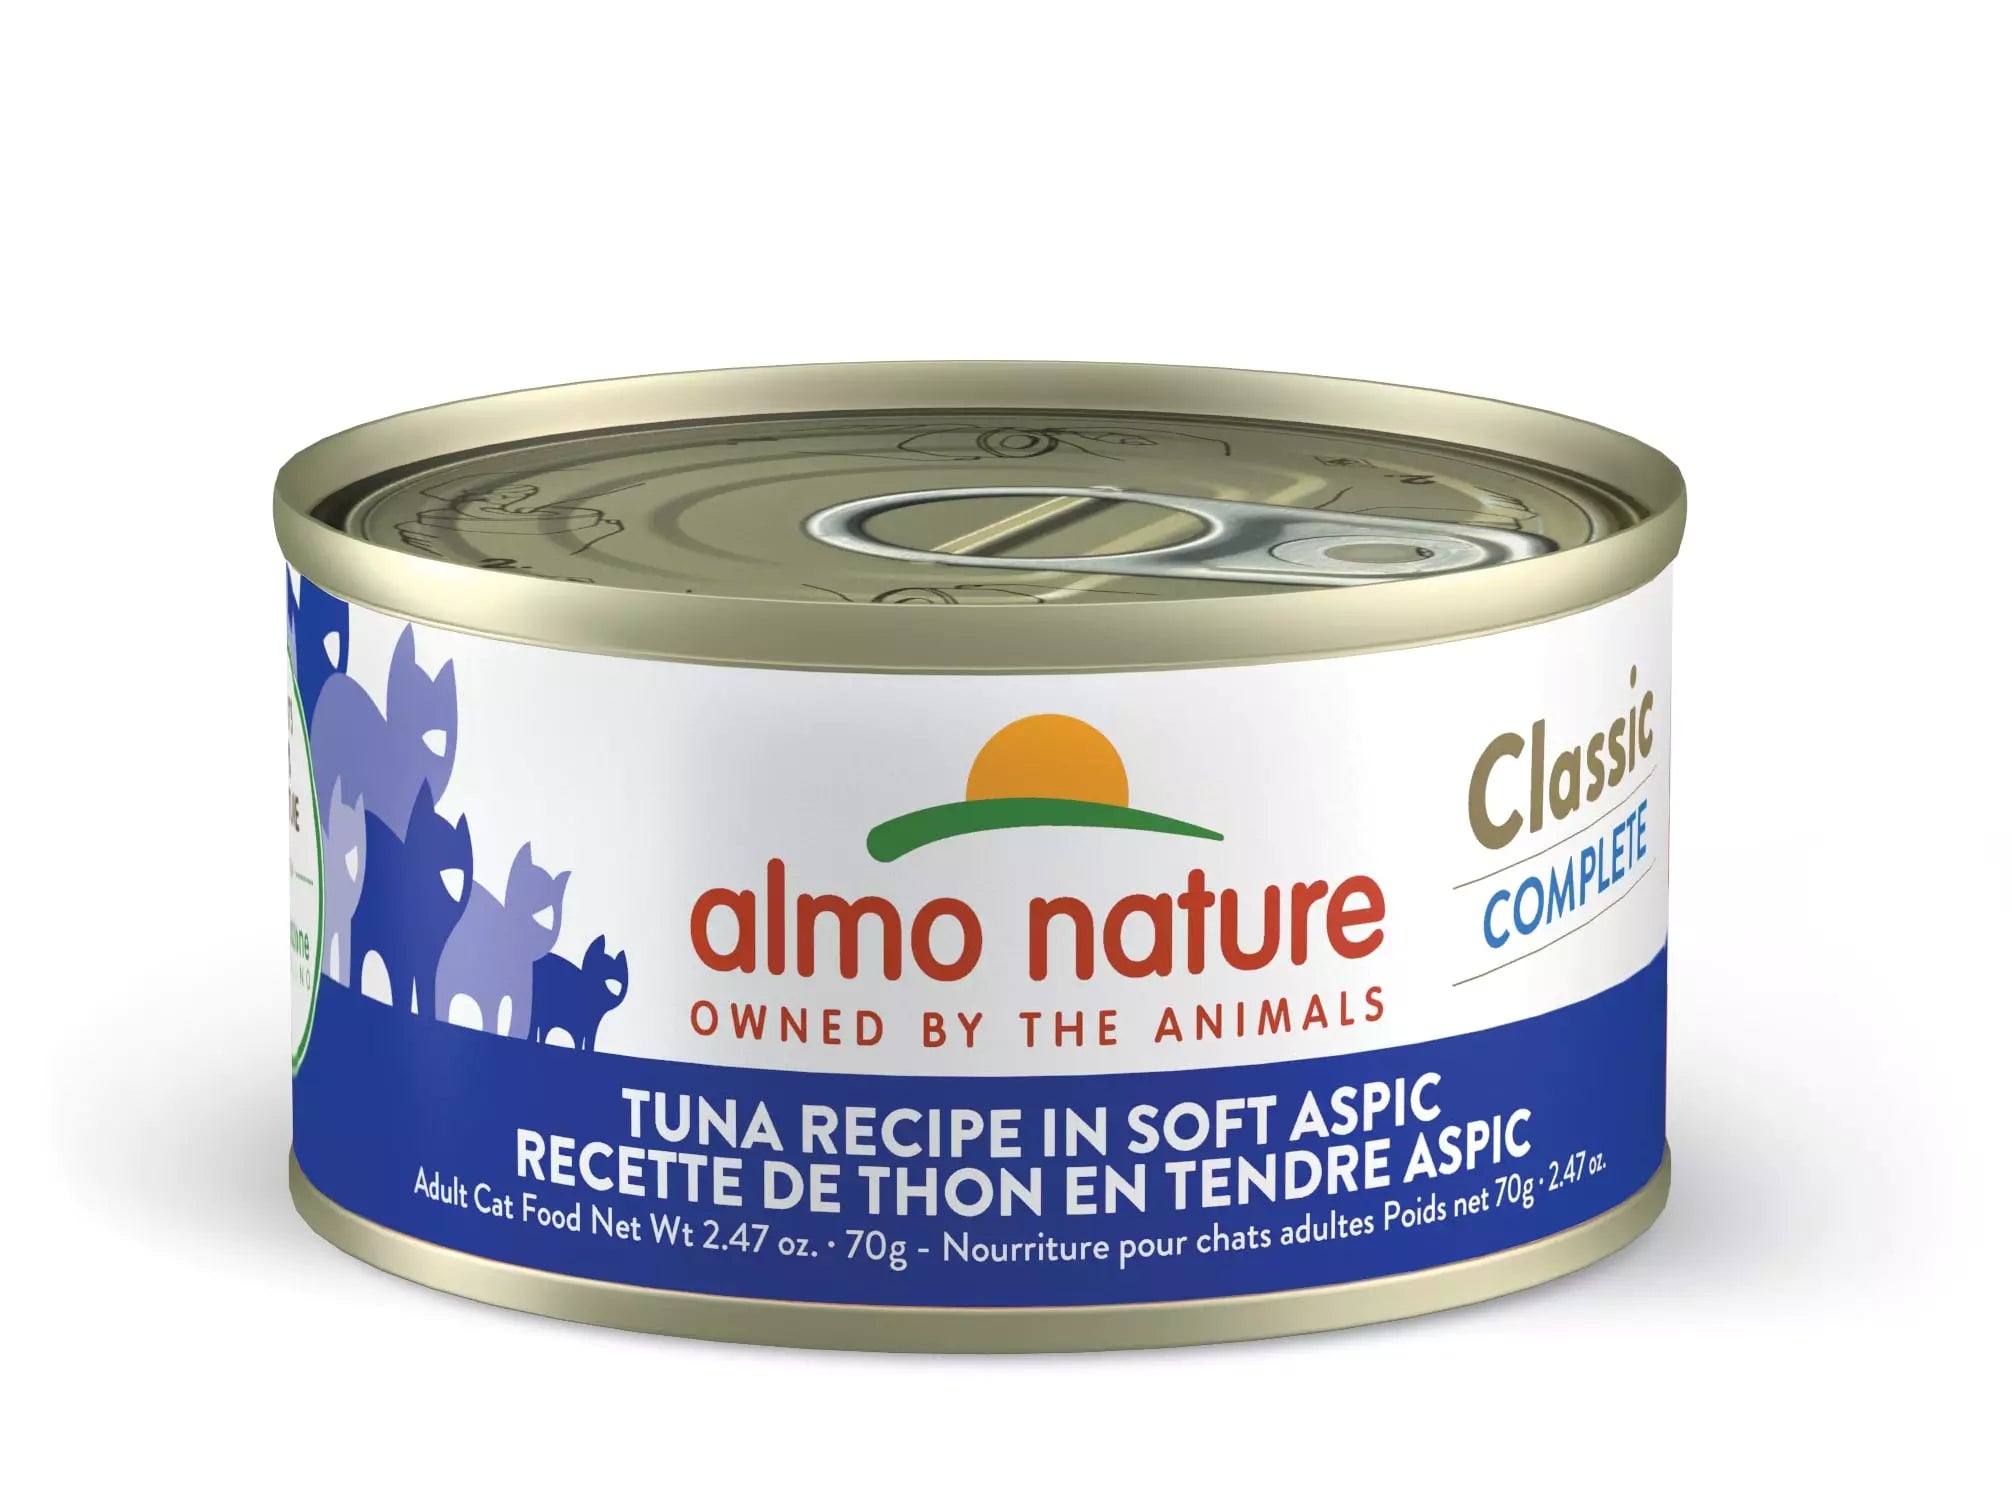 Almo Nature - Classic Complete Tuna in Soft Aspic (Wet Cat Food)